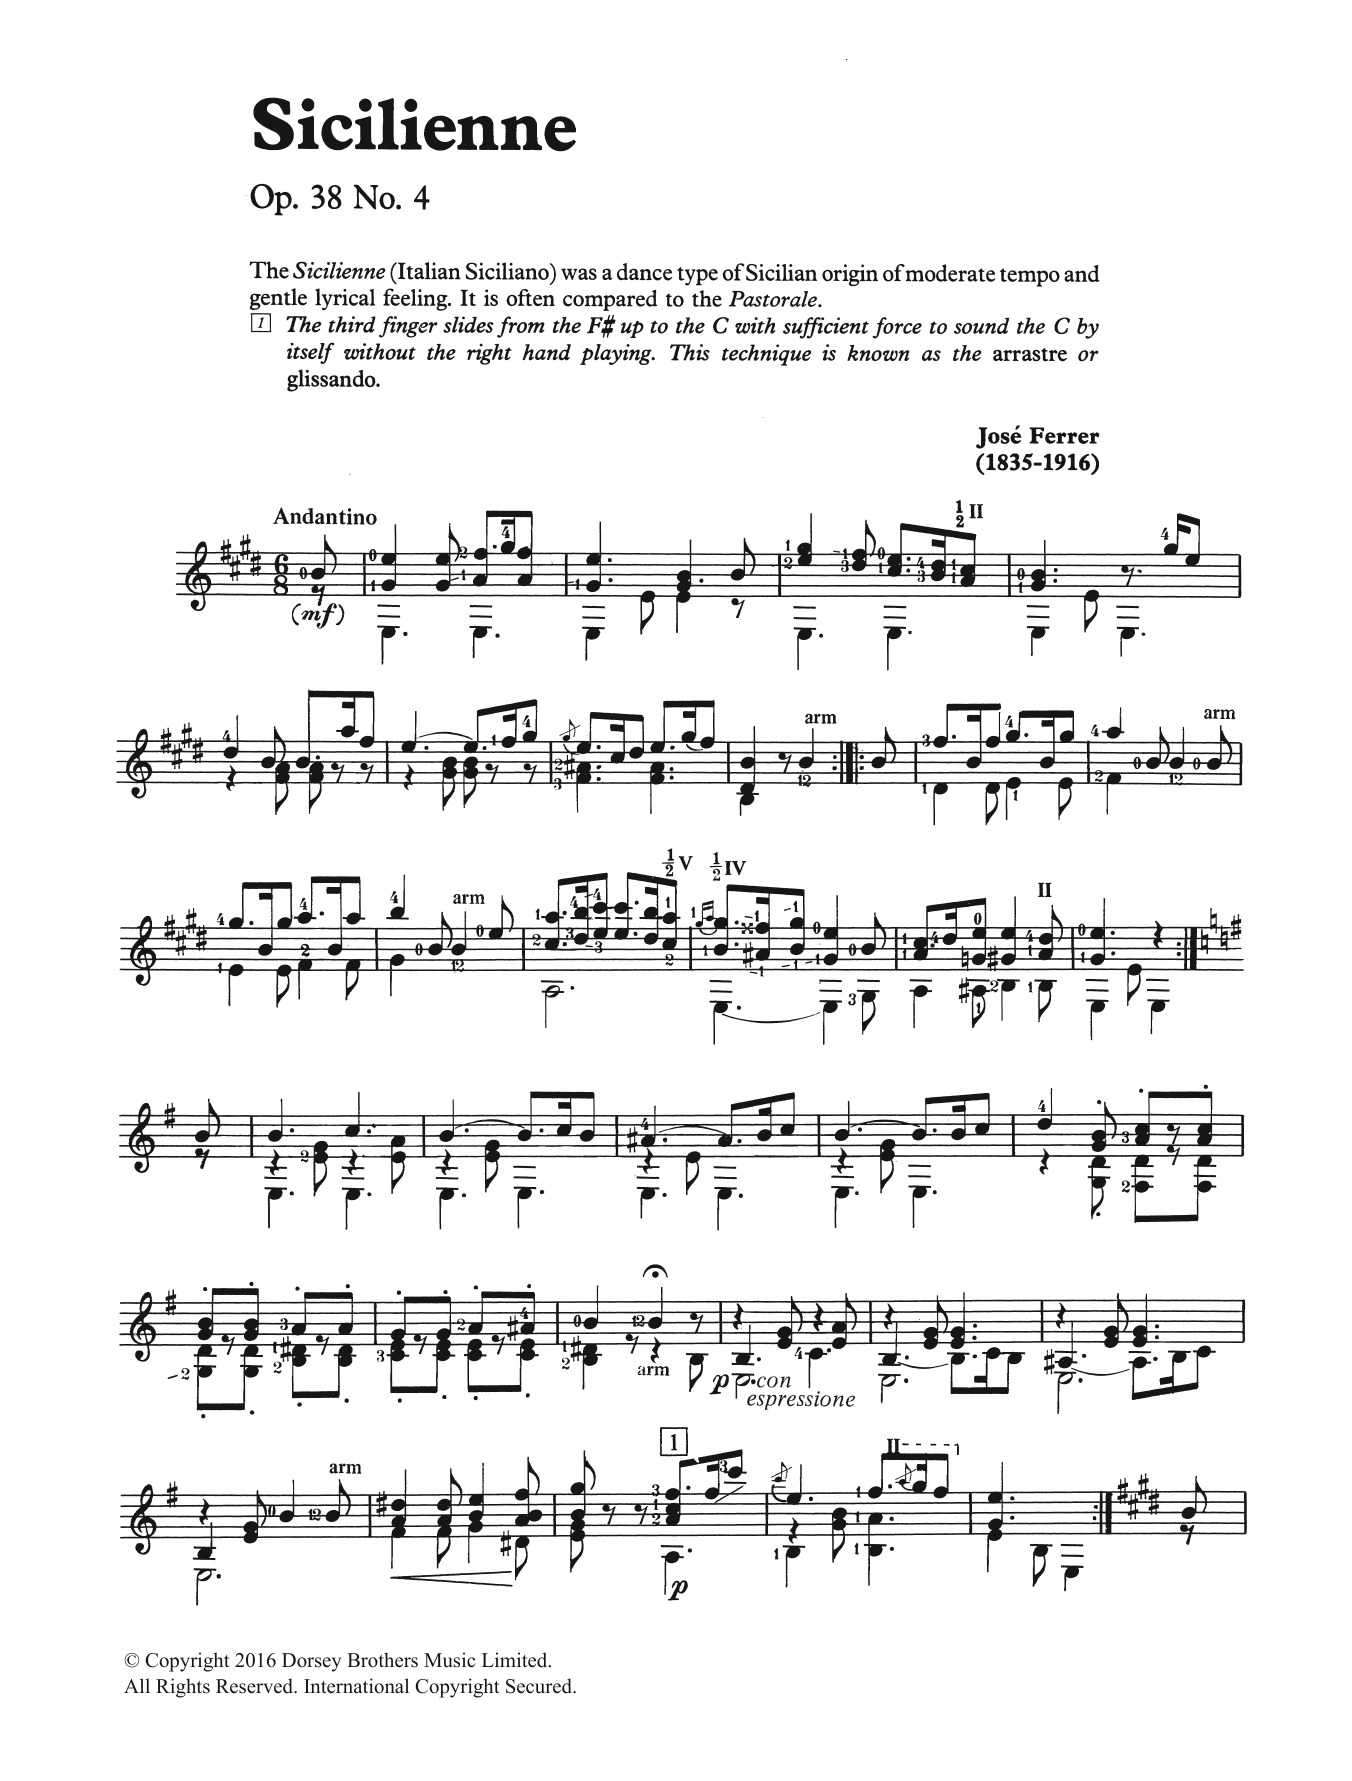 Jose Ferrer Sicilienne Sheet Music Notes & Chords for Guitar - Download or Print PDF